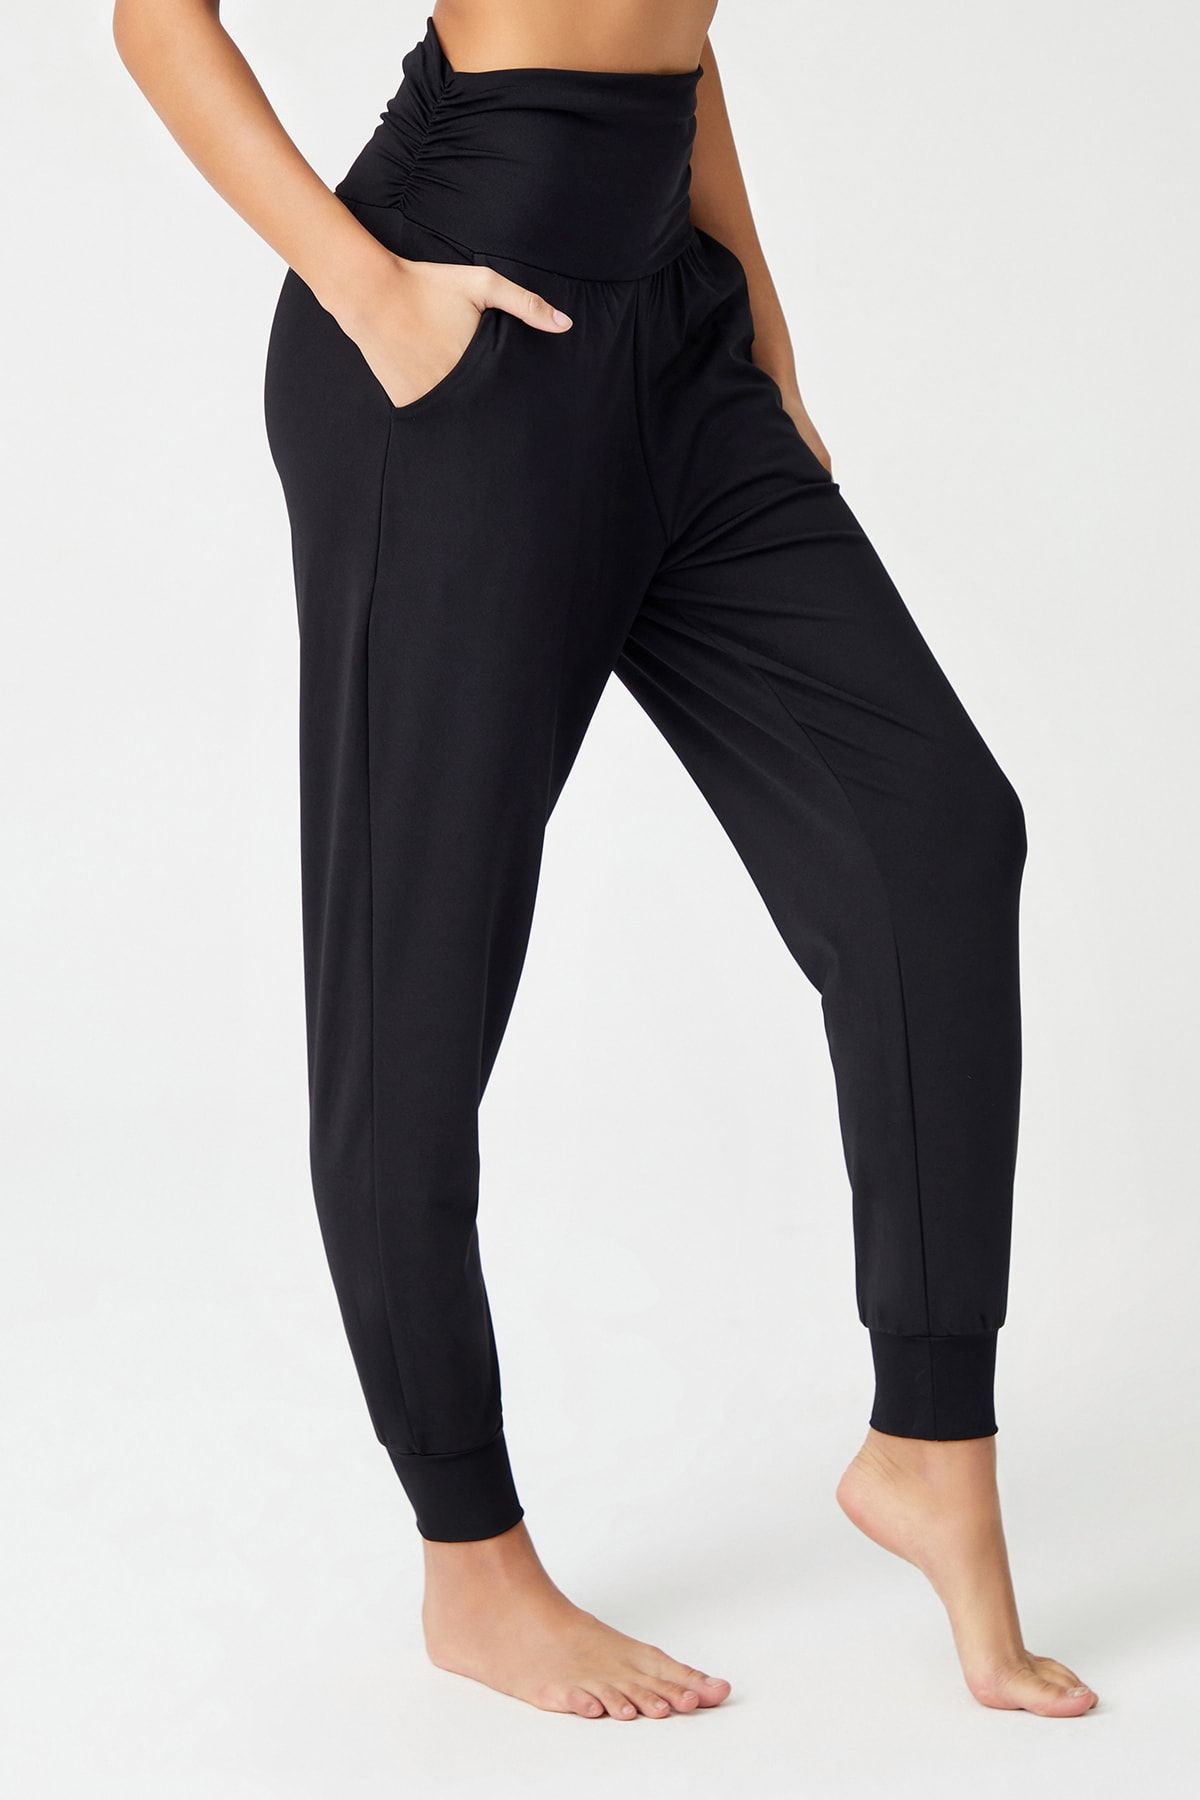 LOS OJOS Siyah Beli Lastikli Şalvar Görünümlü Harem Pantolon Yoga Joggers